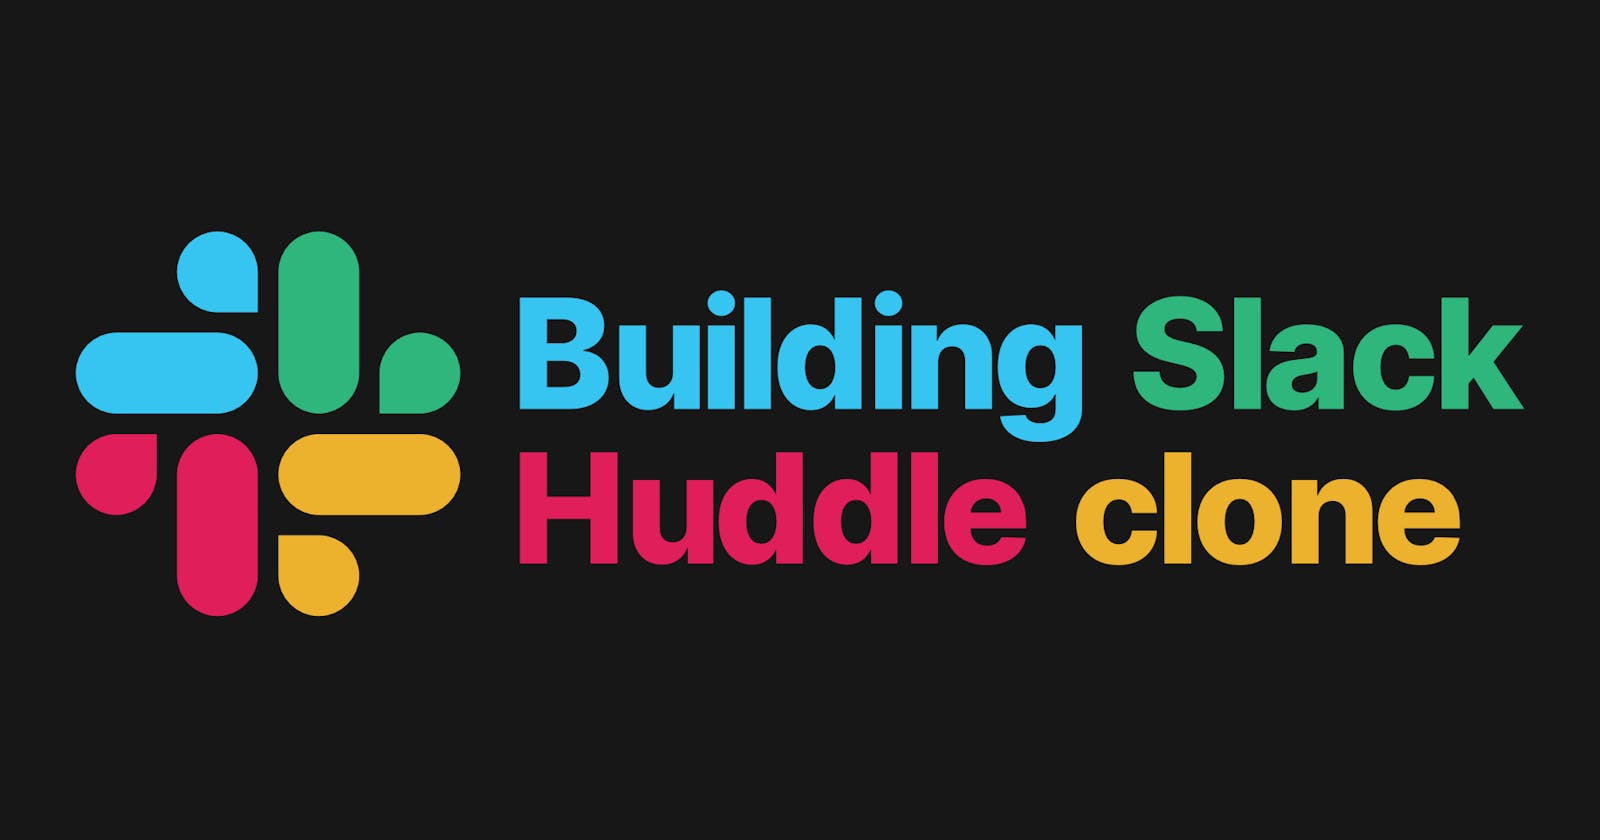 Building Slack huddle clone